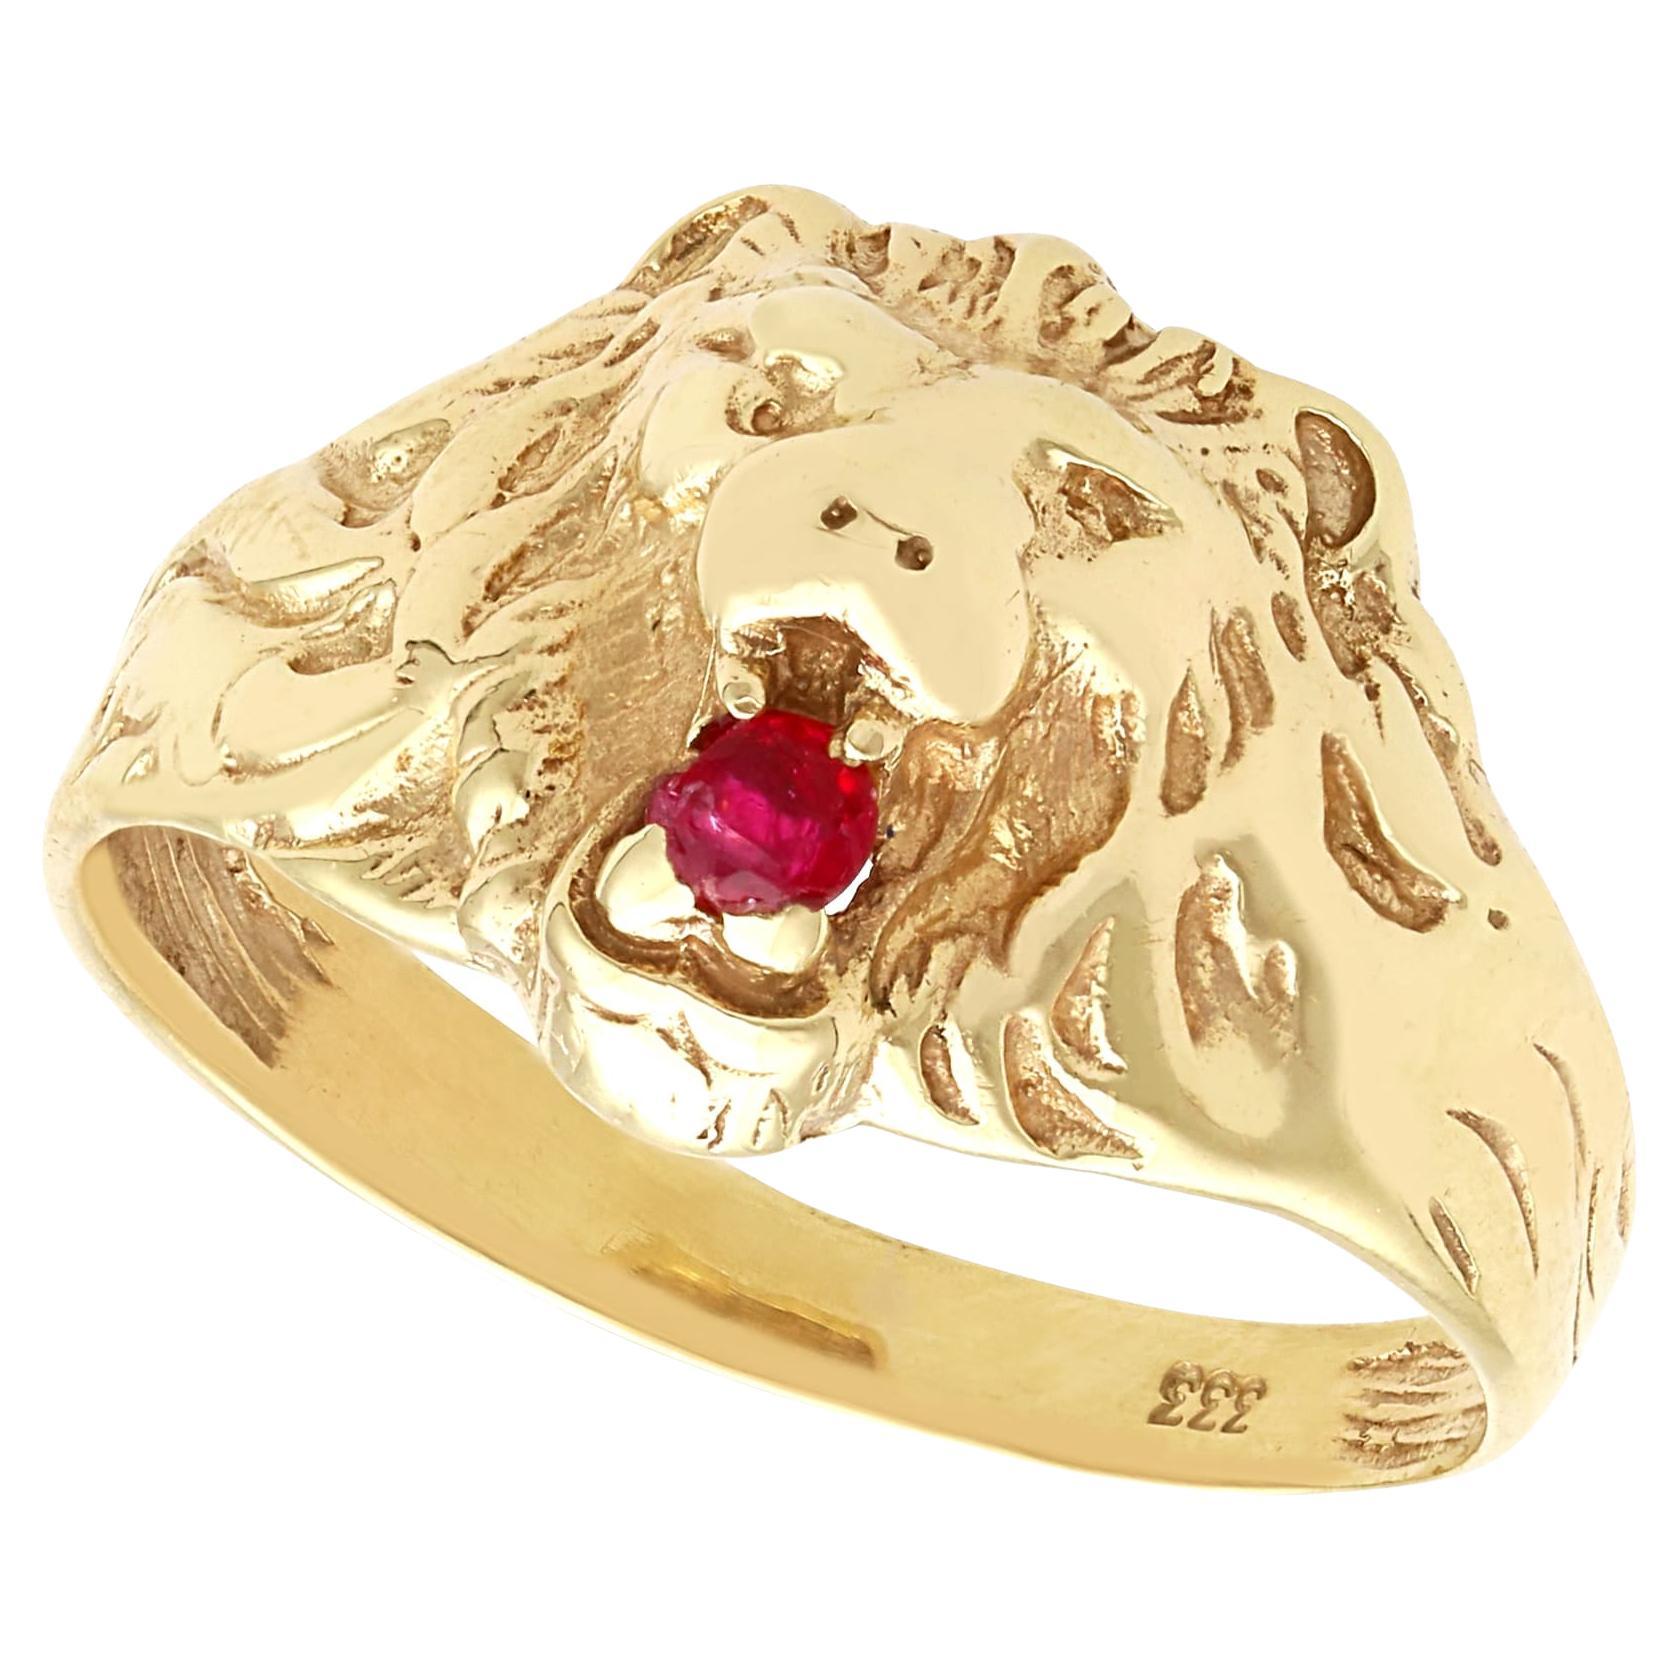 1 Gram Gold Plated Expensive-looking Design High-quality Ring For Men -  Style B460, सोने की अंगूठी - Soni Fashion, Rajkot | ID: 2852597116673